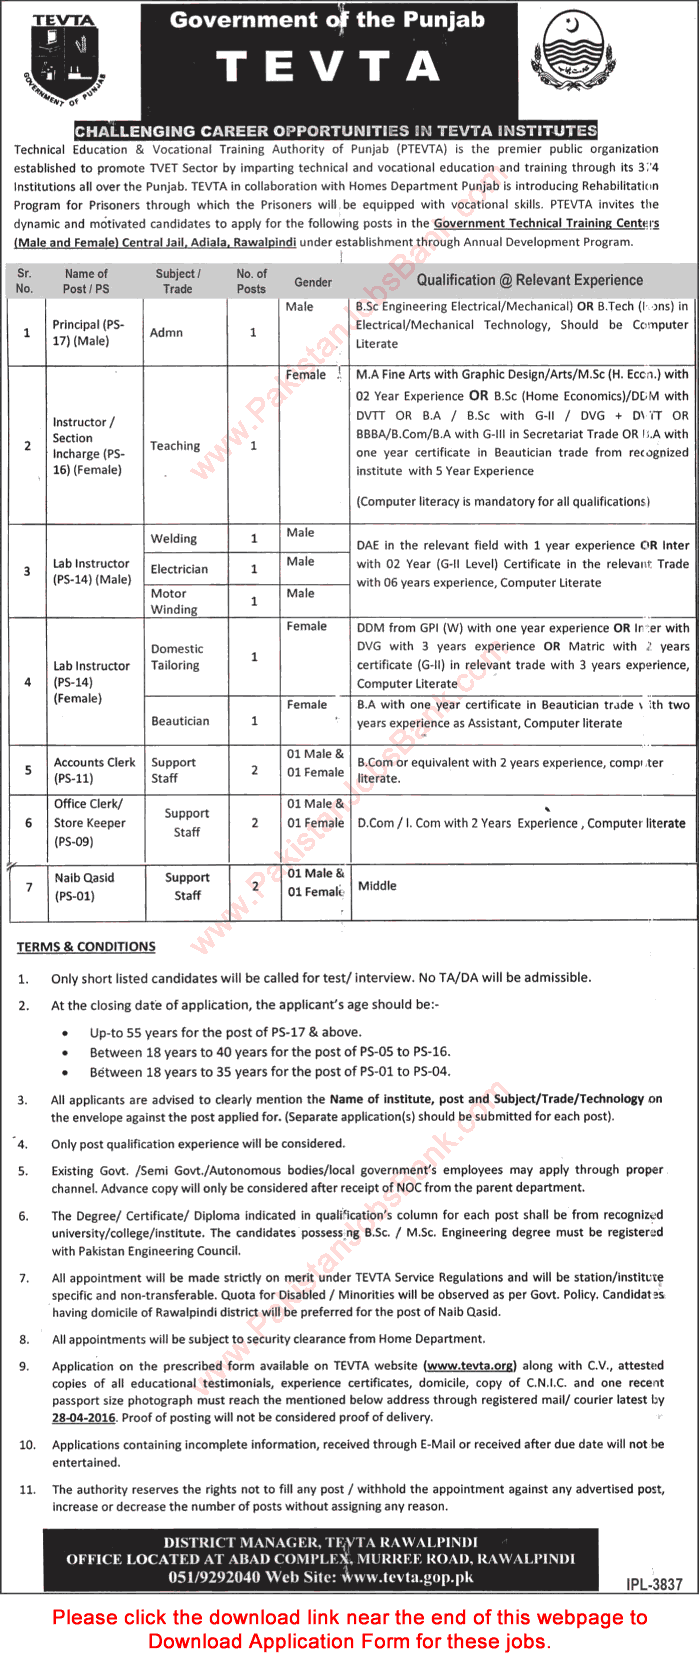 TEVTA Jobs in Rawalpindi 2016 April Punjab Government Technical Training Center Application Form Latest